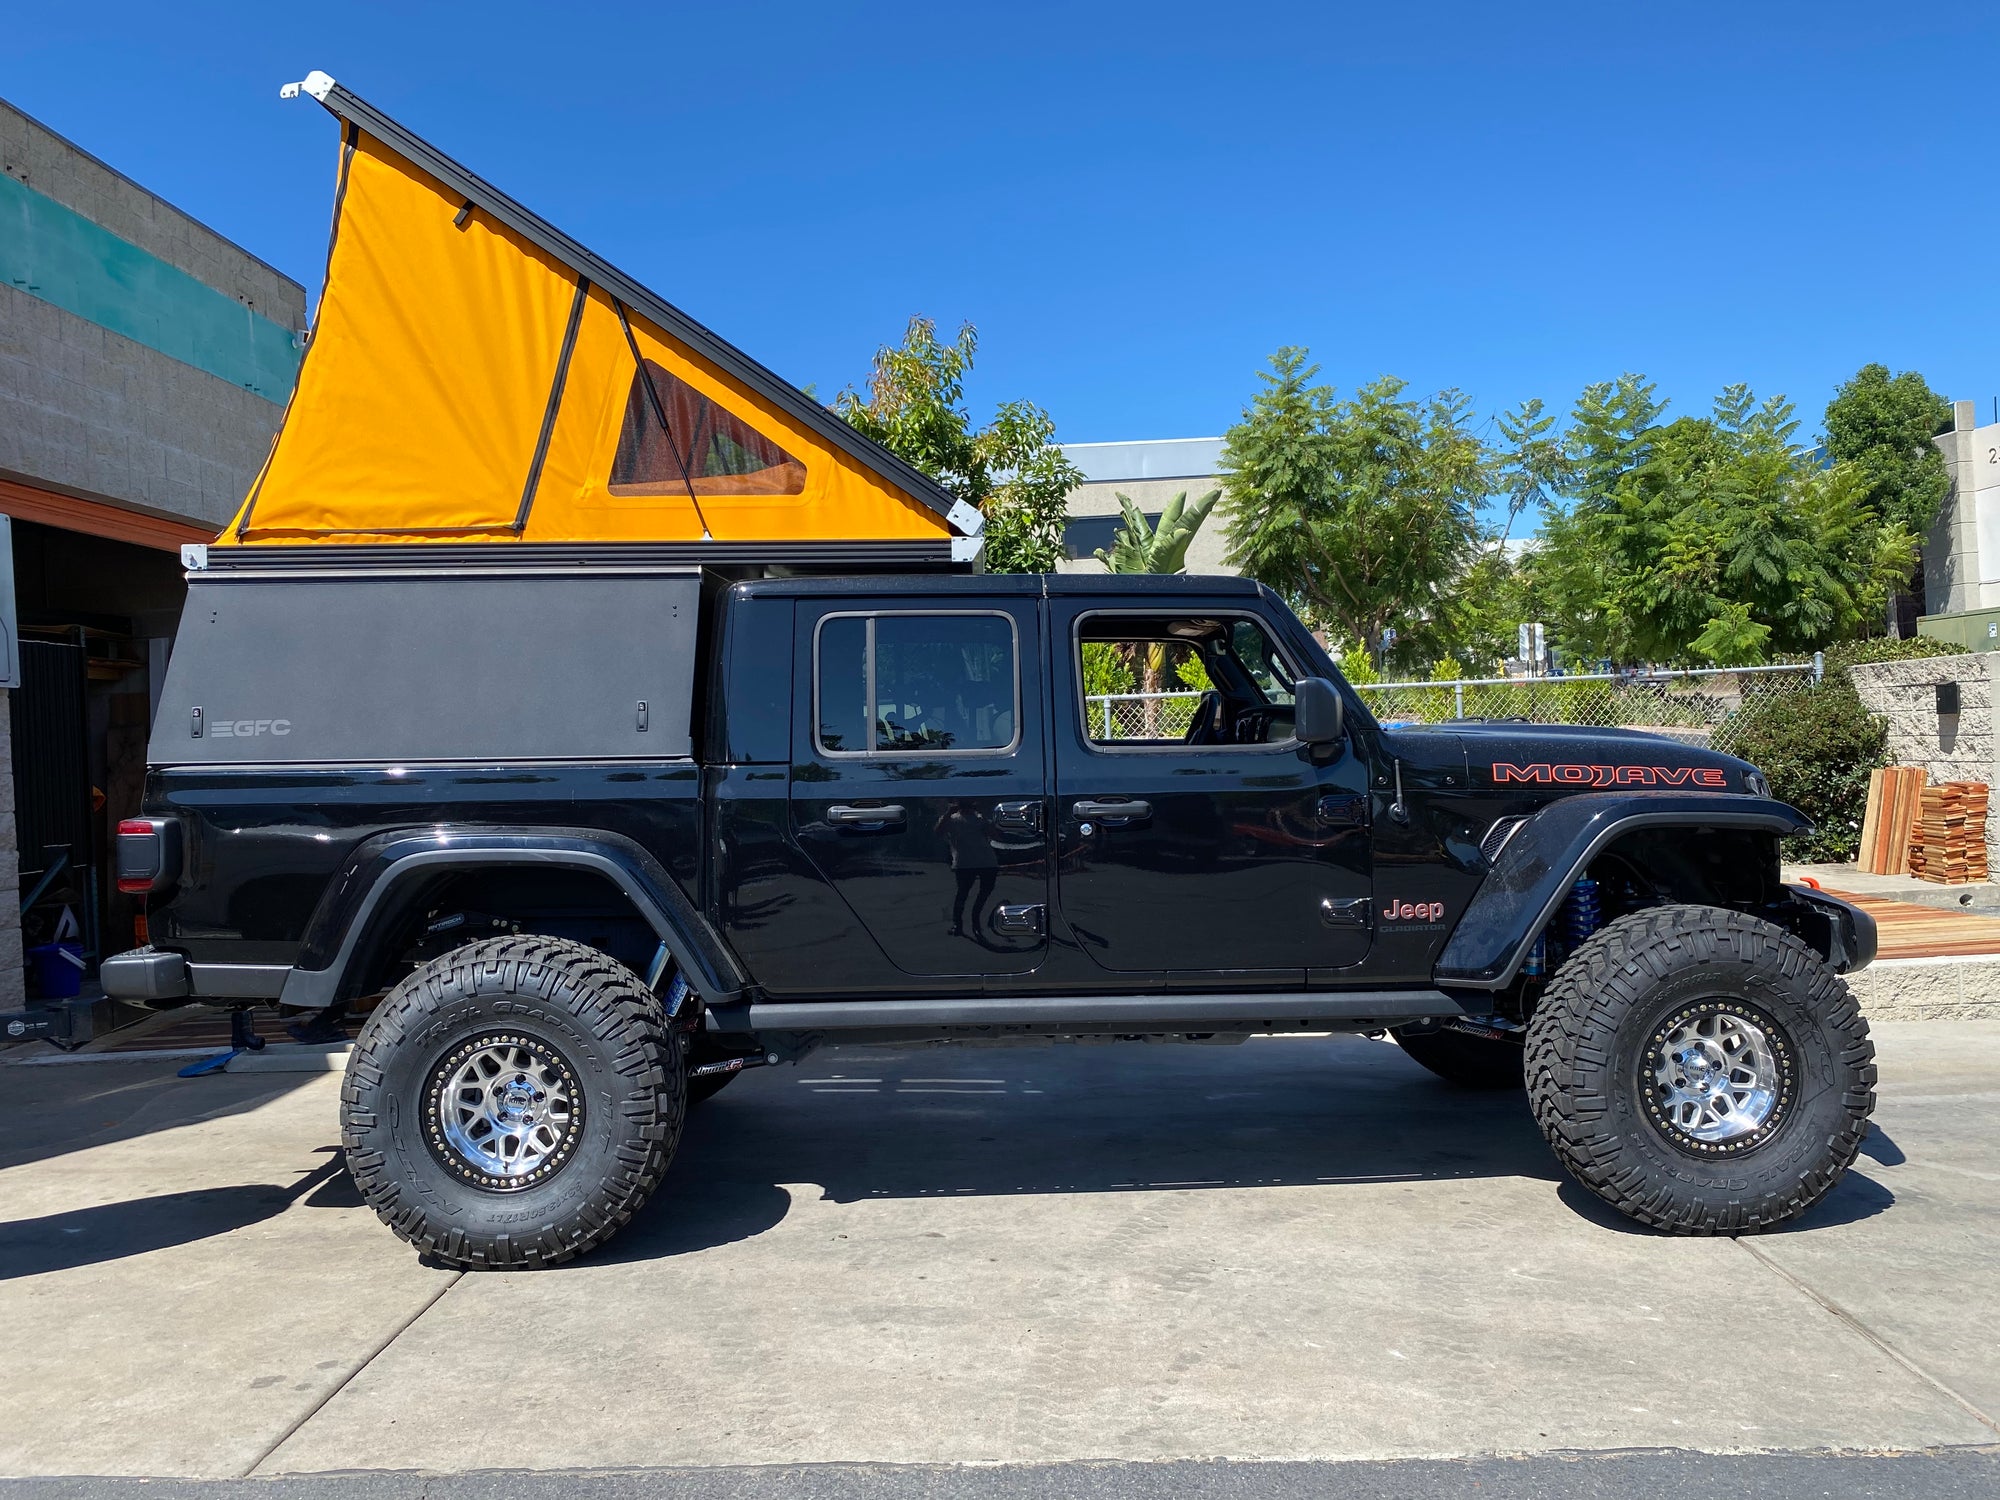 2021 Jeep Gladiator Camper - Build #5422